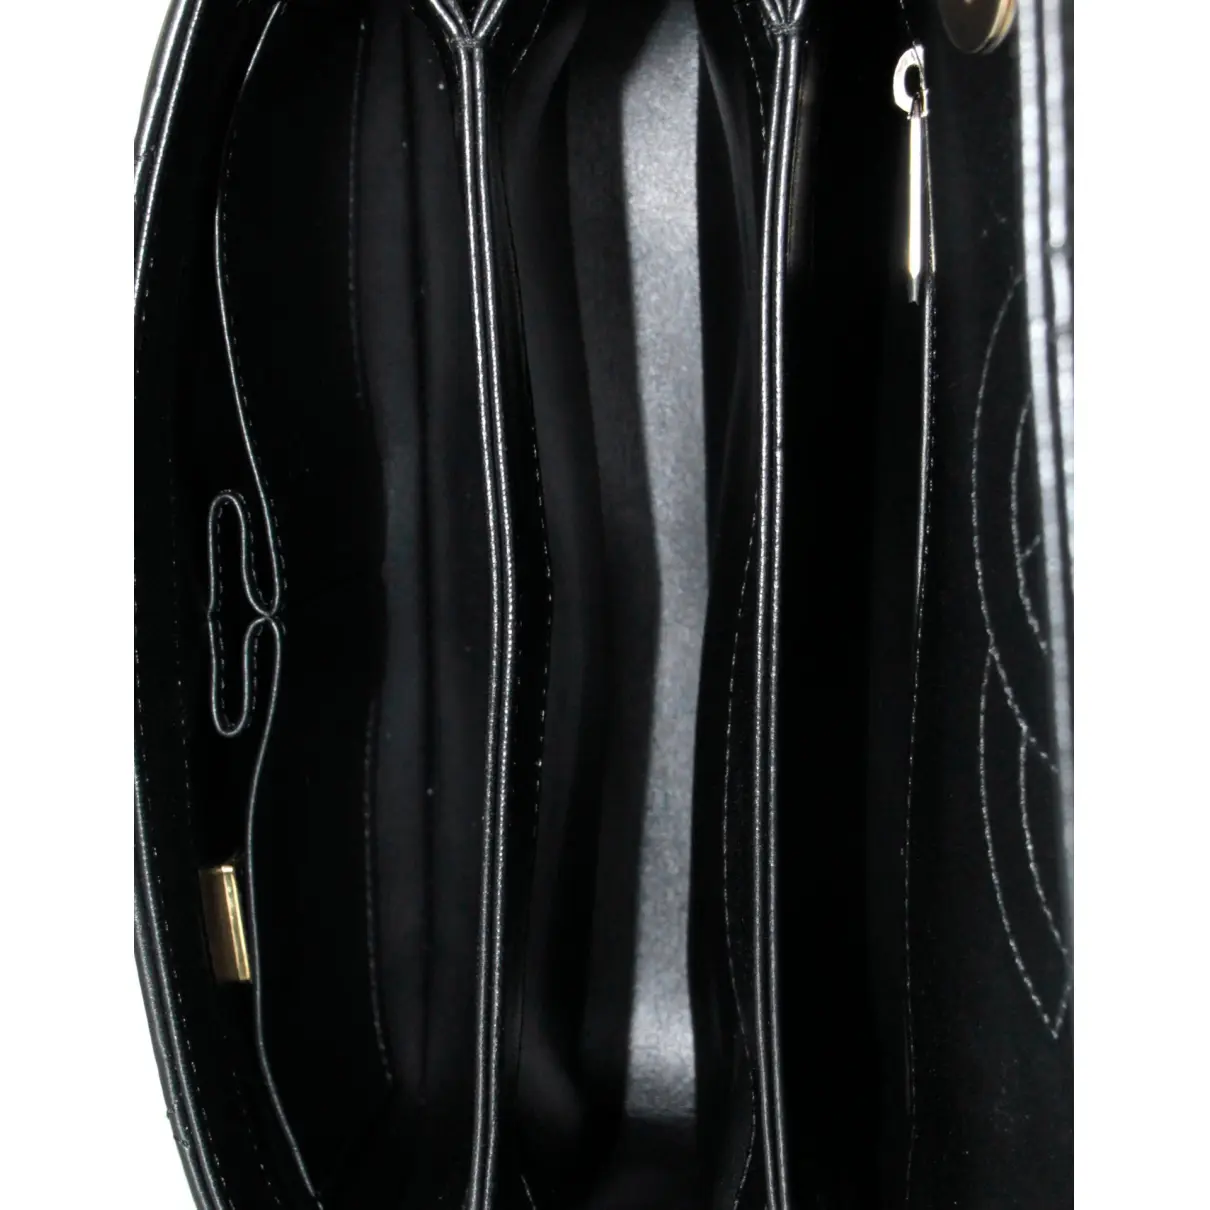 Buy Chanel Trendy CC Top Handle leather handbag online